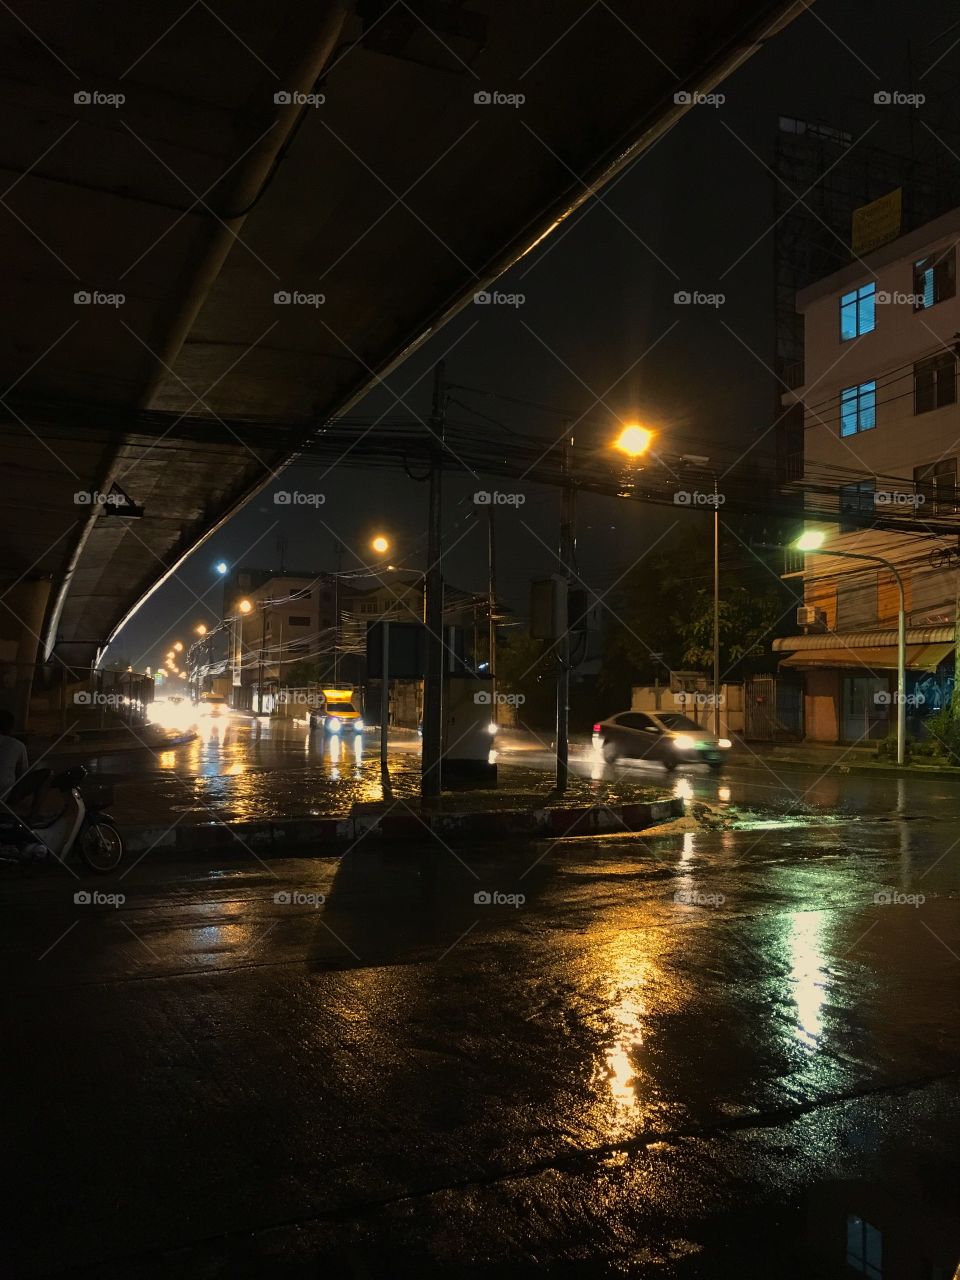 Rainning at night